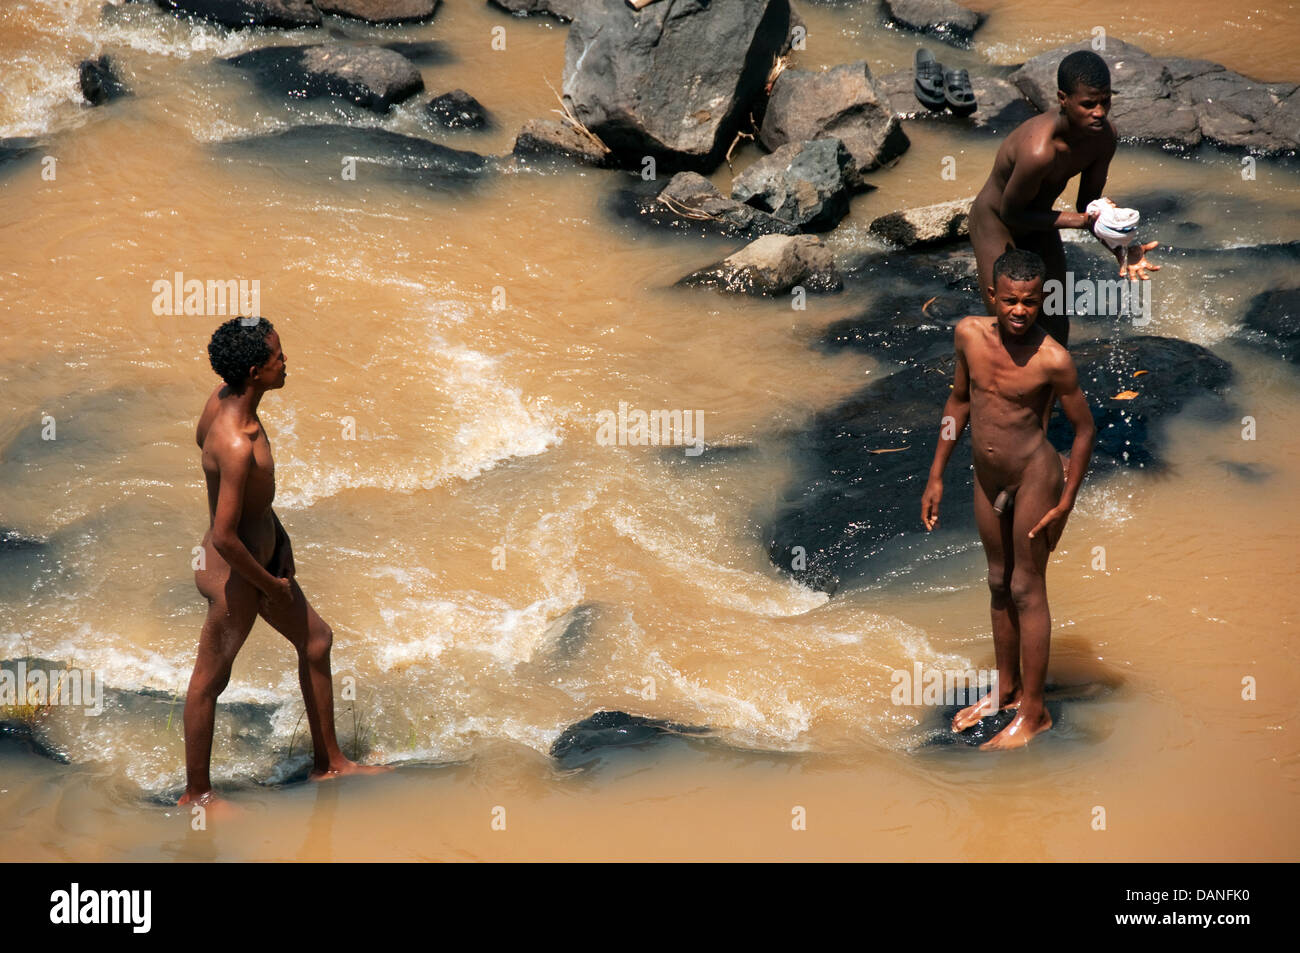 Nude river bath